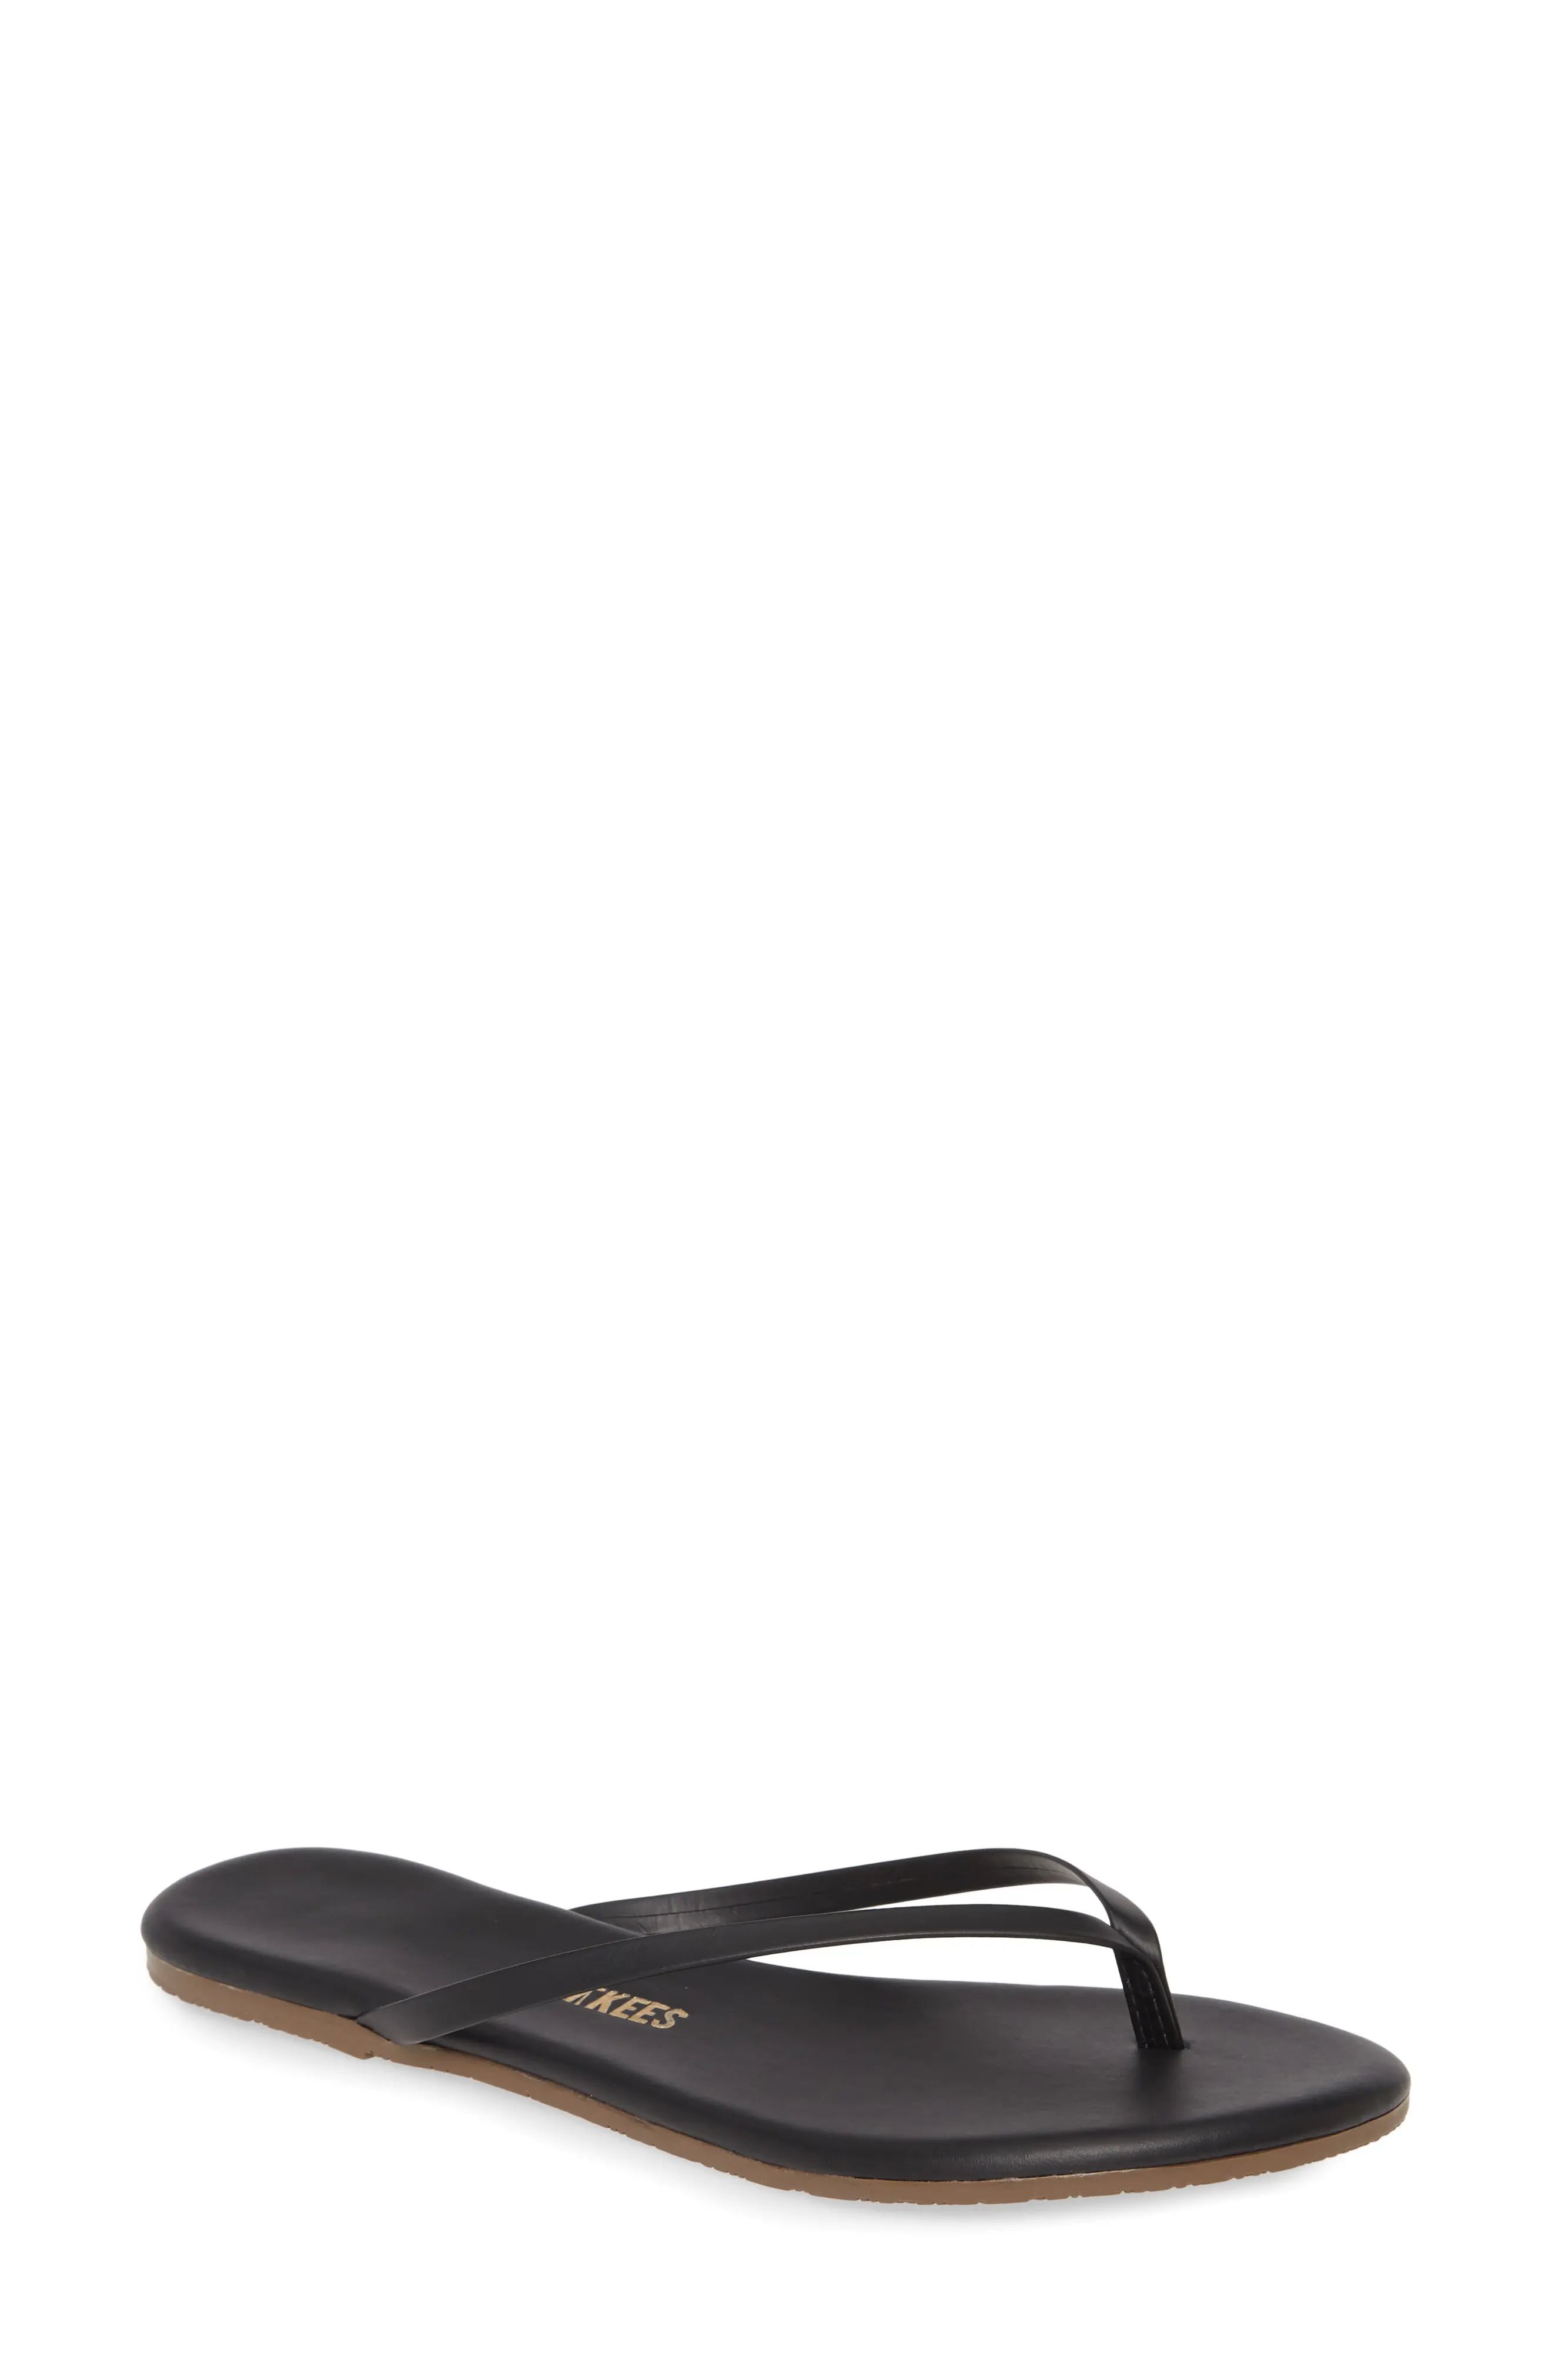 Women's Tkees 'Liners' Flip Flop, Size 8 M - Black | Nordstrom